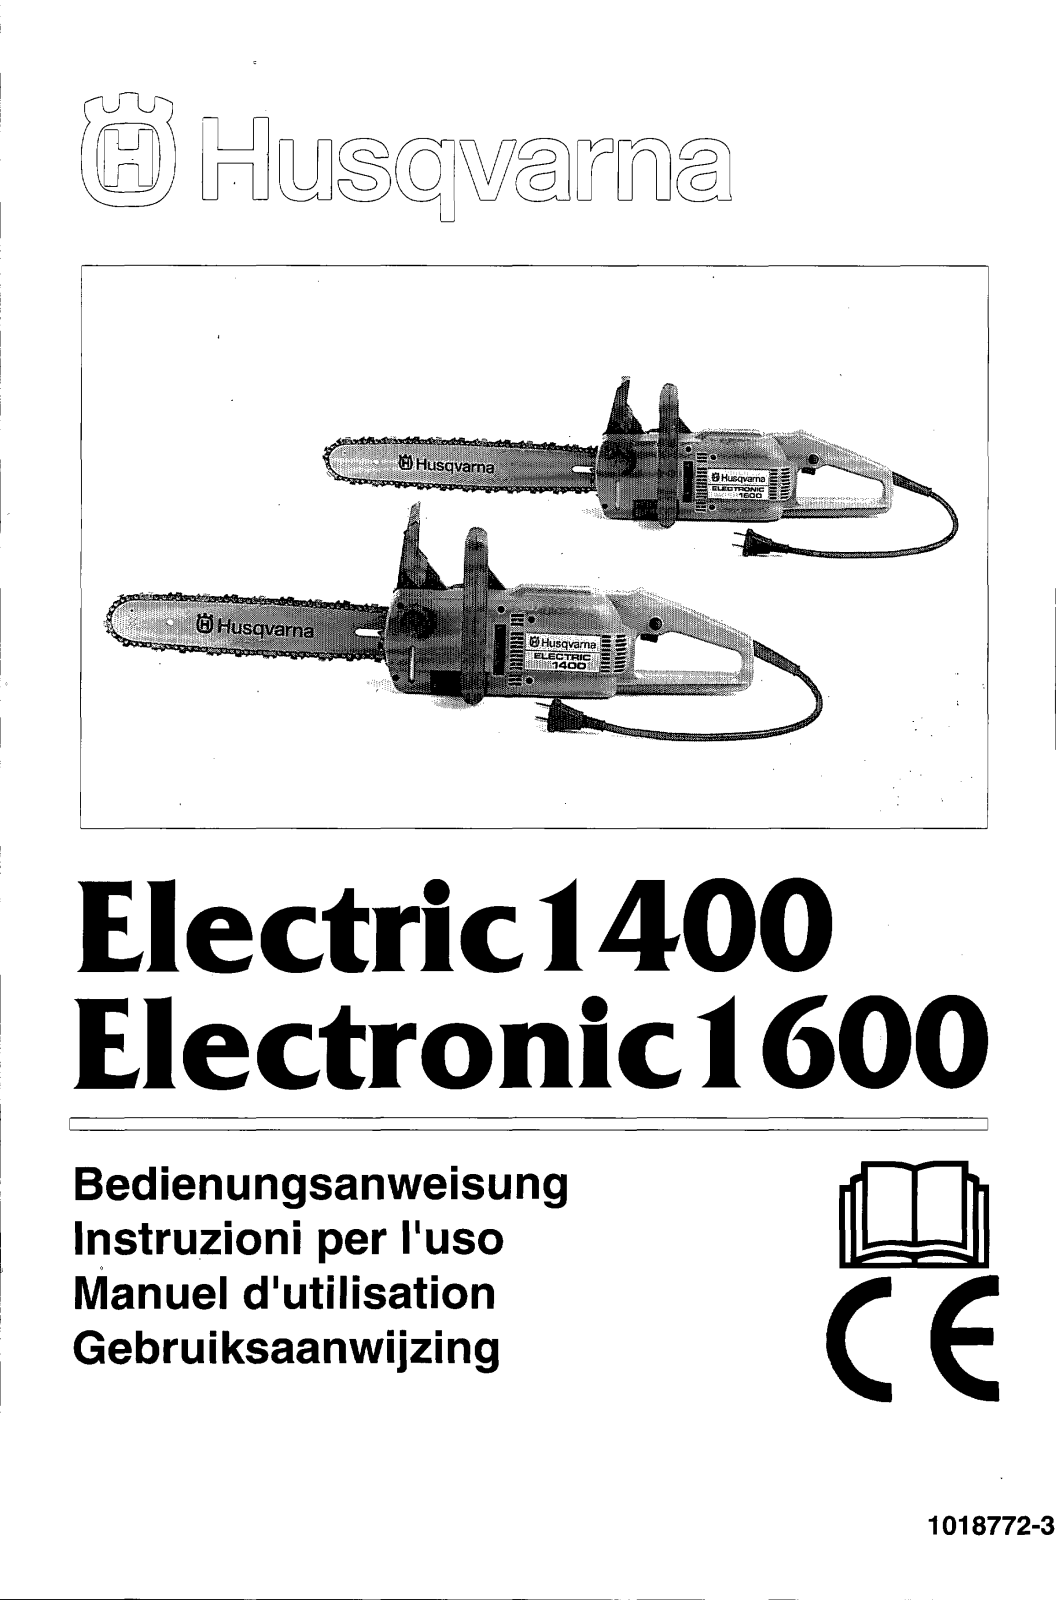 HUSQVARNA ELECTRONIC 1600 User Manual